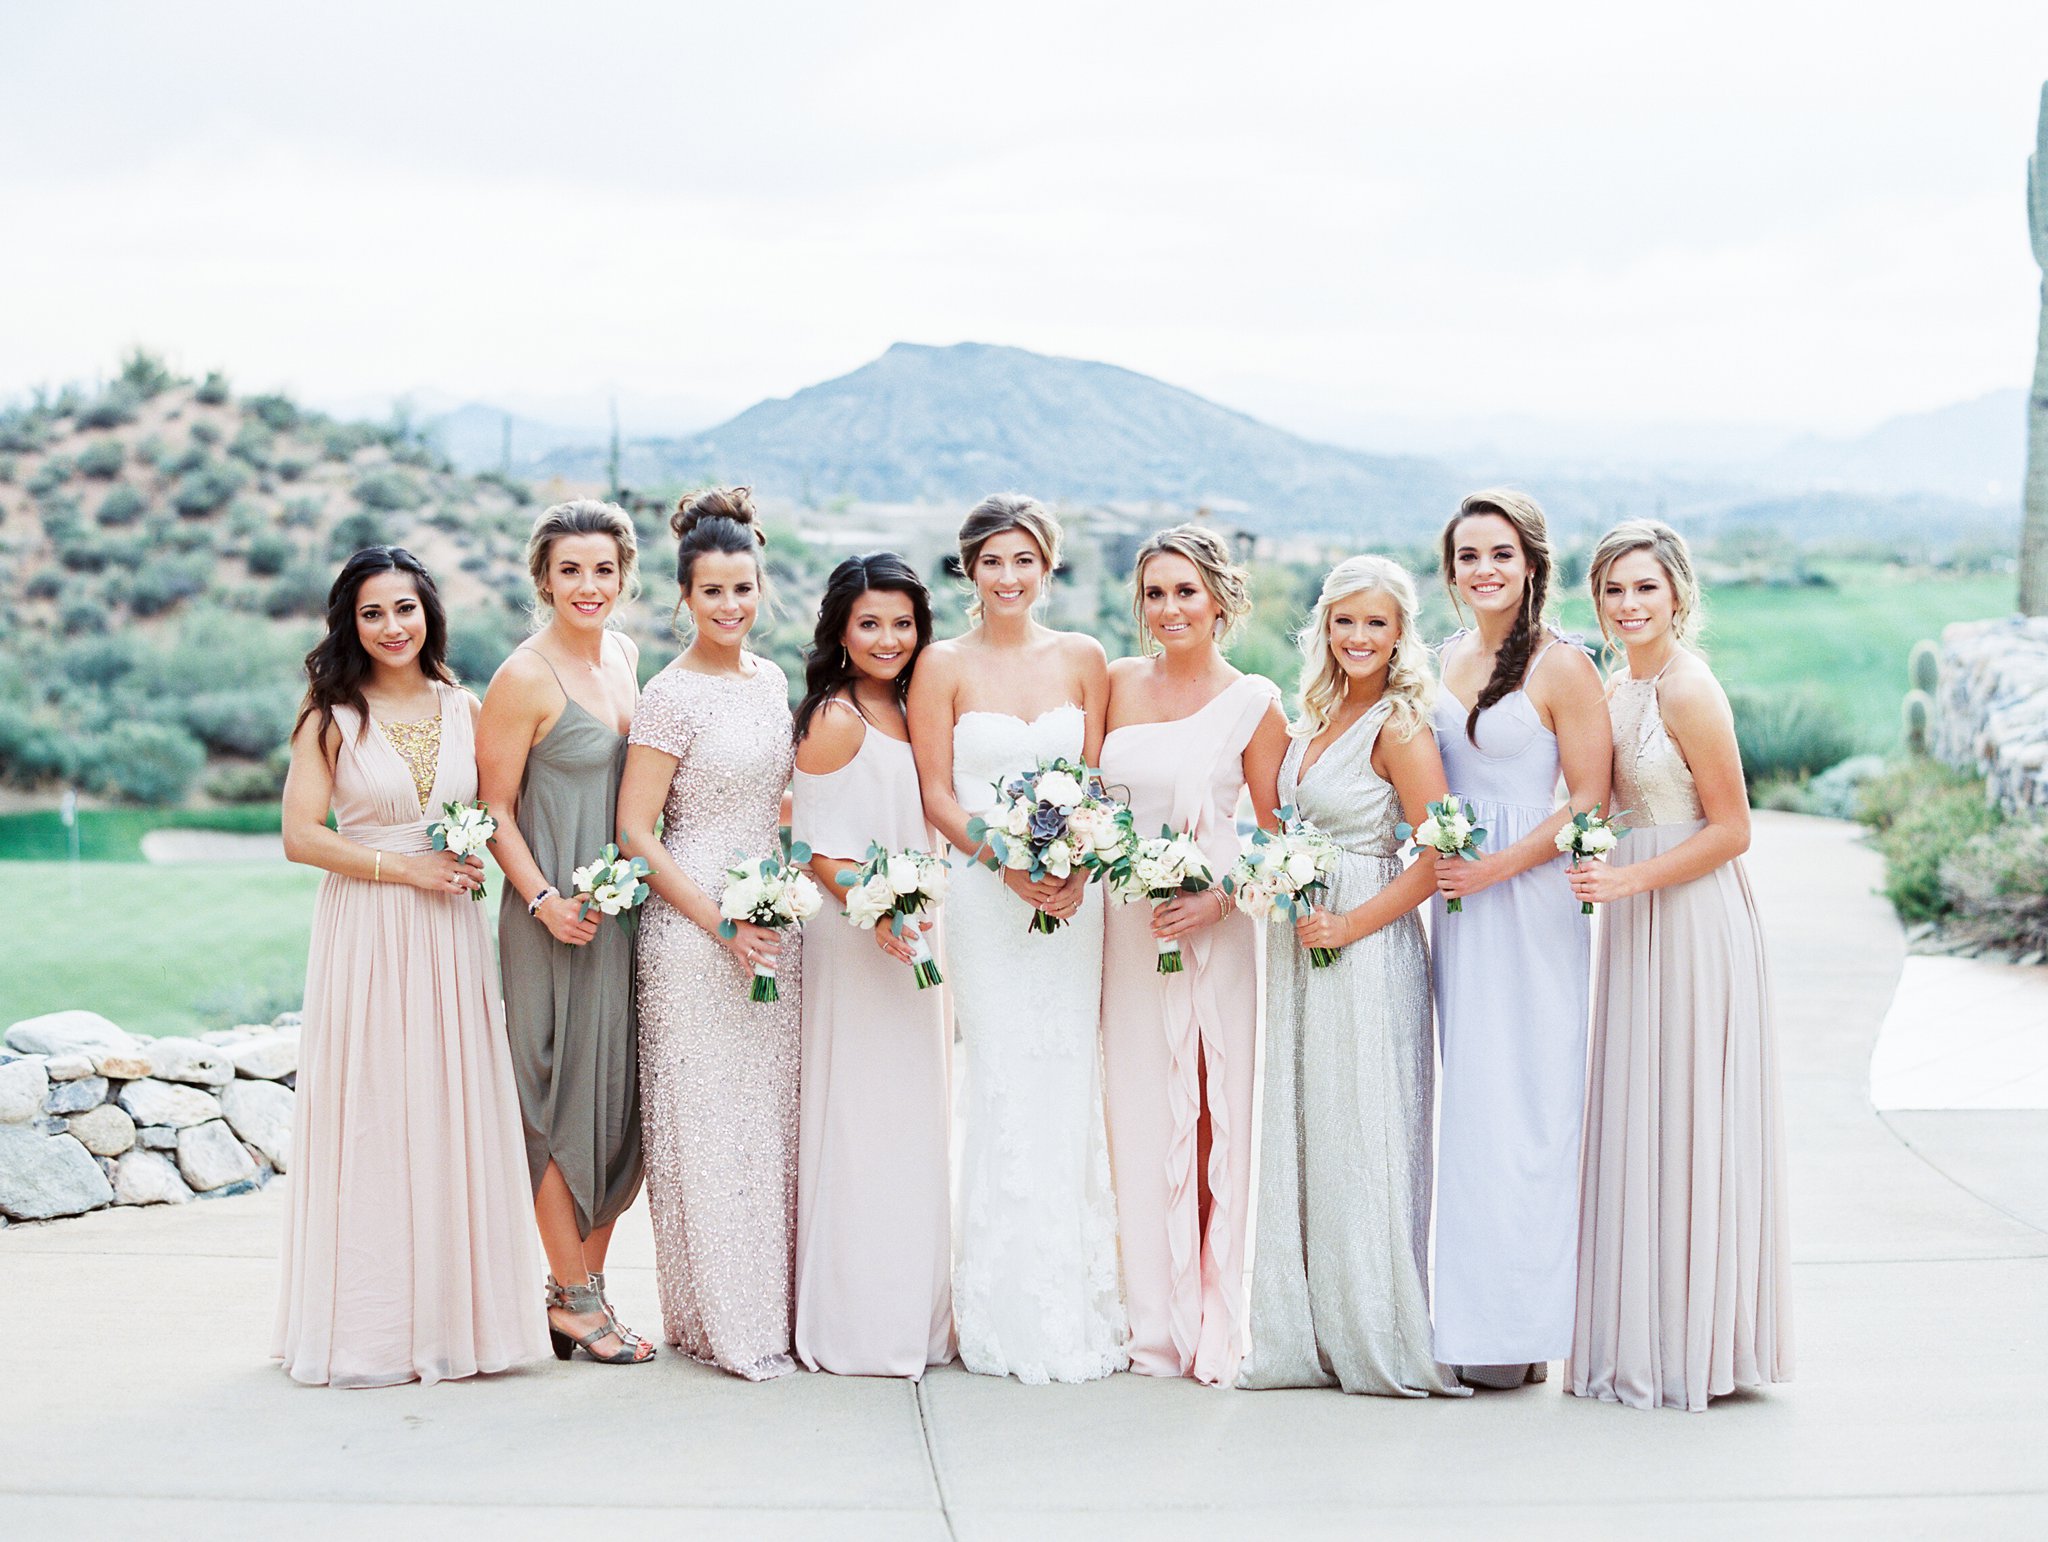 Desert Mountain wedding photos - Rachel Solomon Photography Blog - Phoenix Wedding Photographer